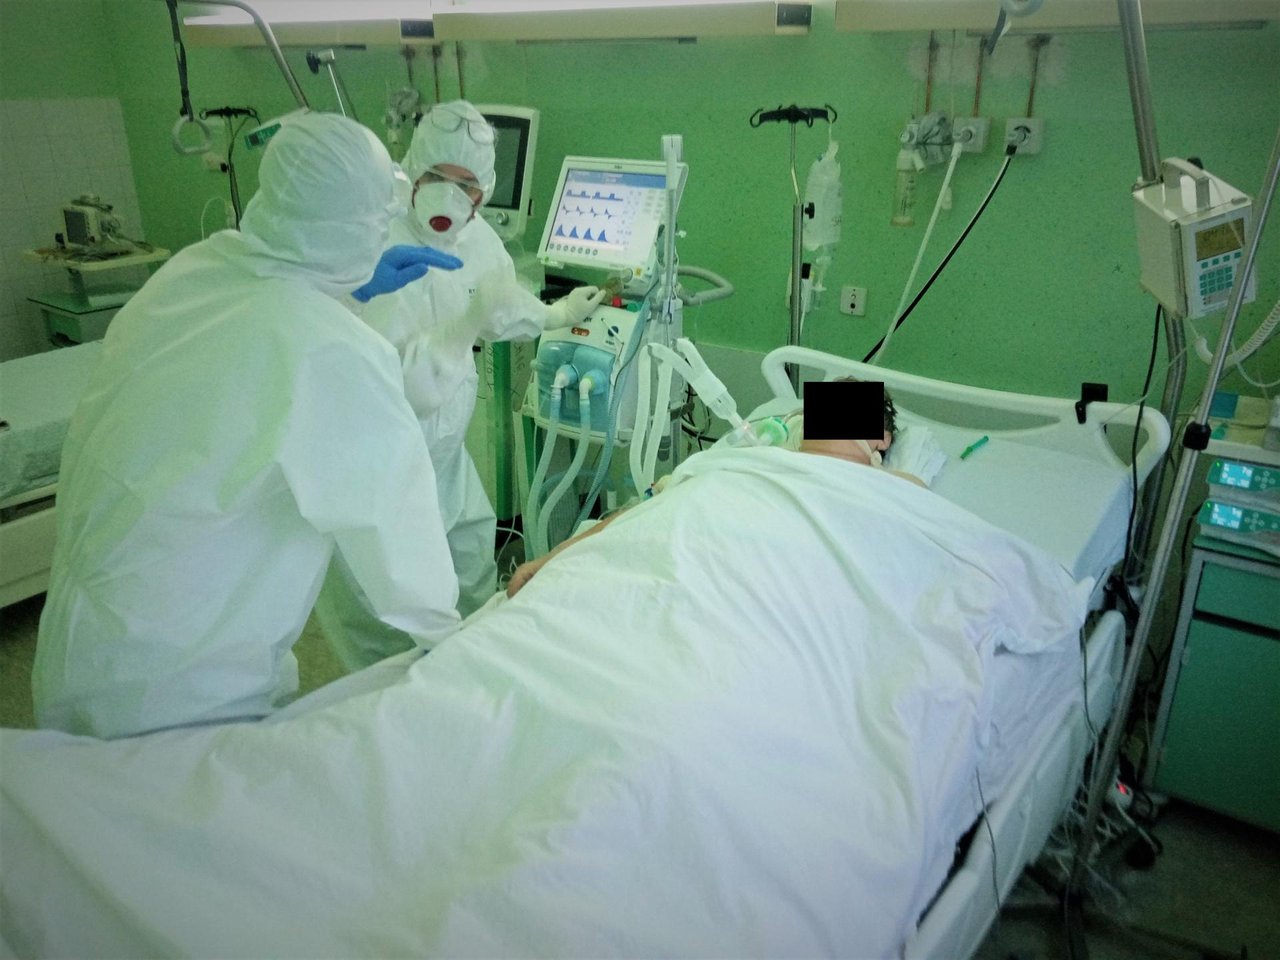 Fotografija: Dvoje medicinskih radnika se konzultiraju oko stanja pacijenta/Foto: Deni Marčinković